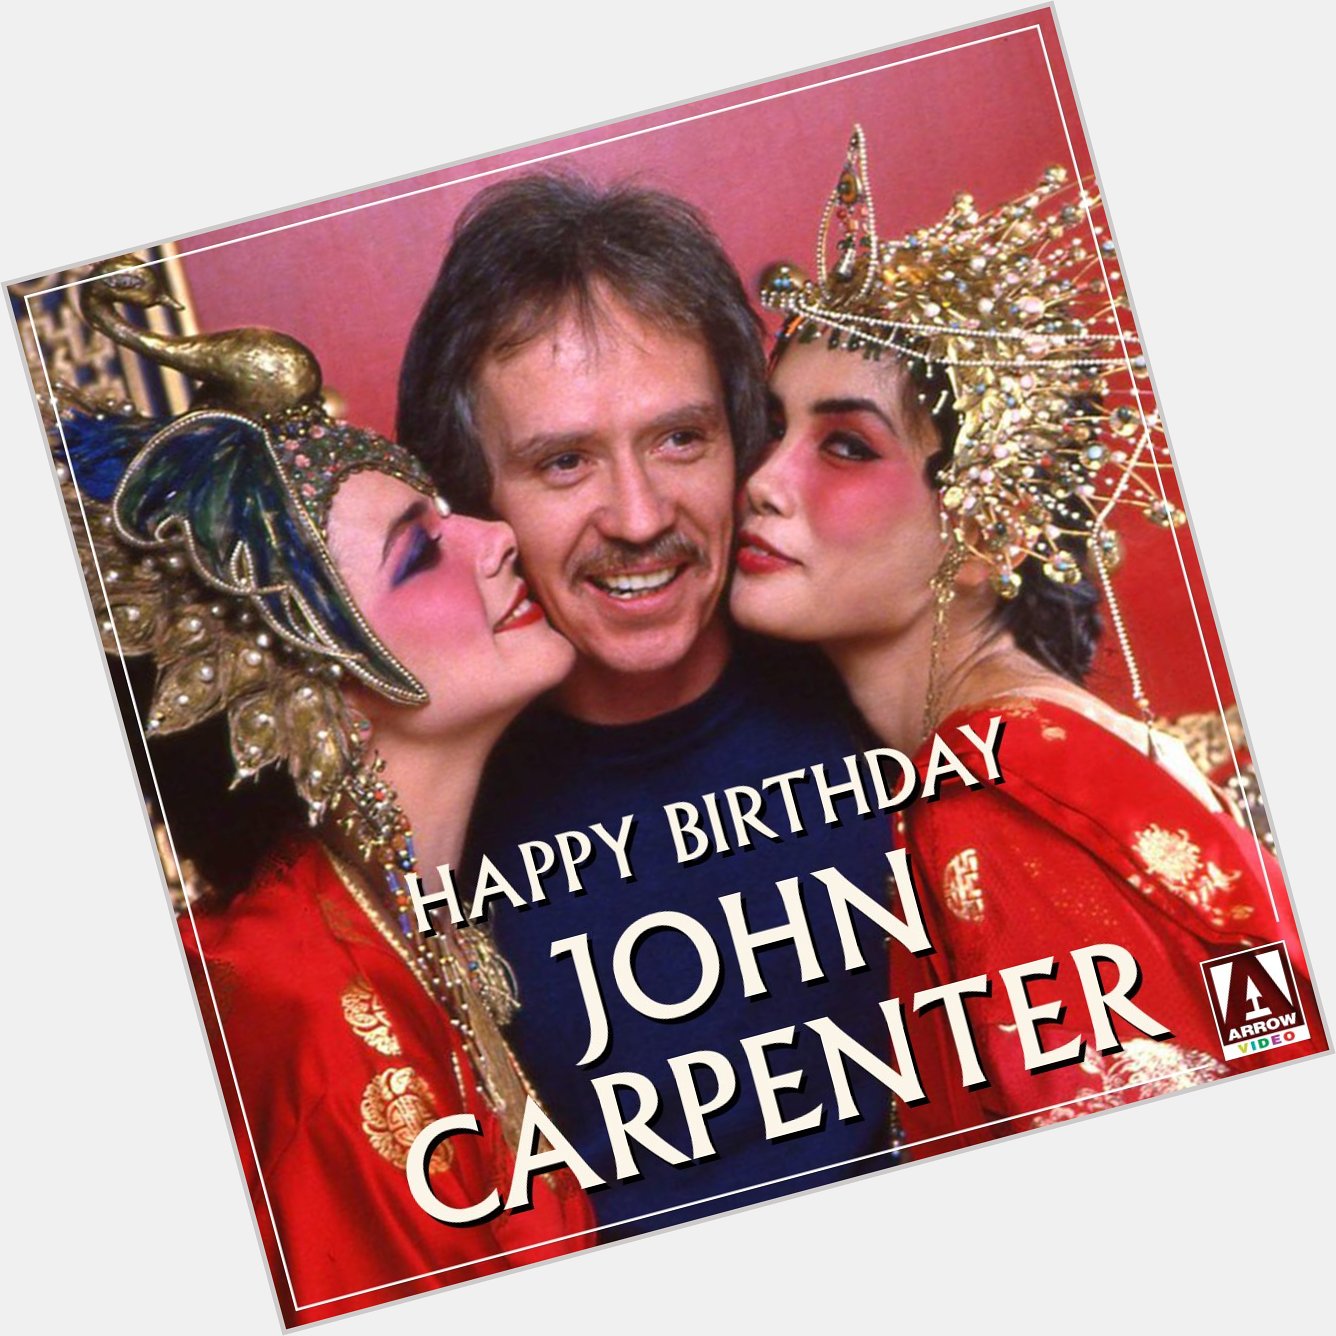 He needs no introduction. He\s a legend. Happy Birthday John Carpenter ( 